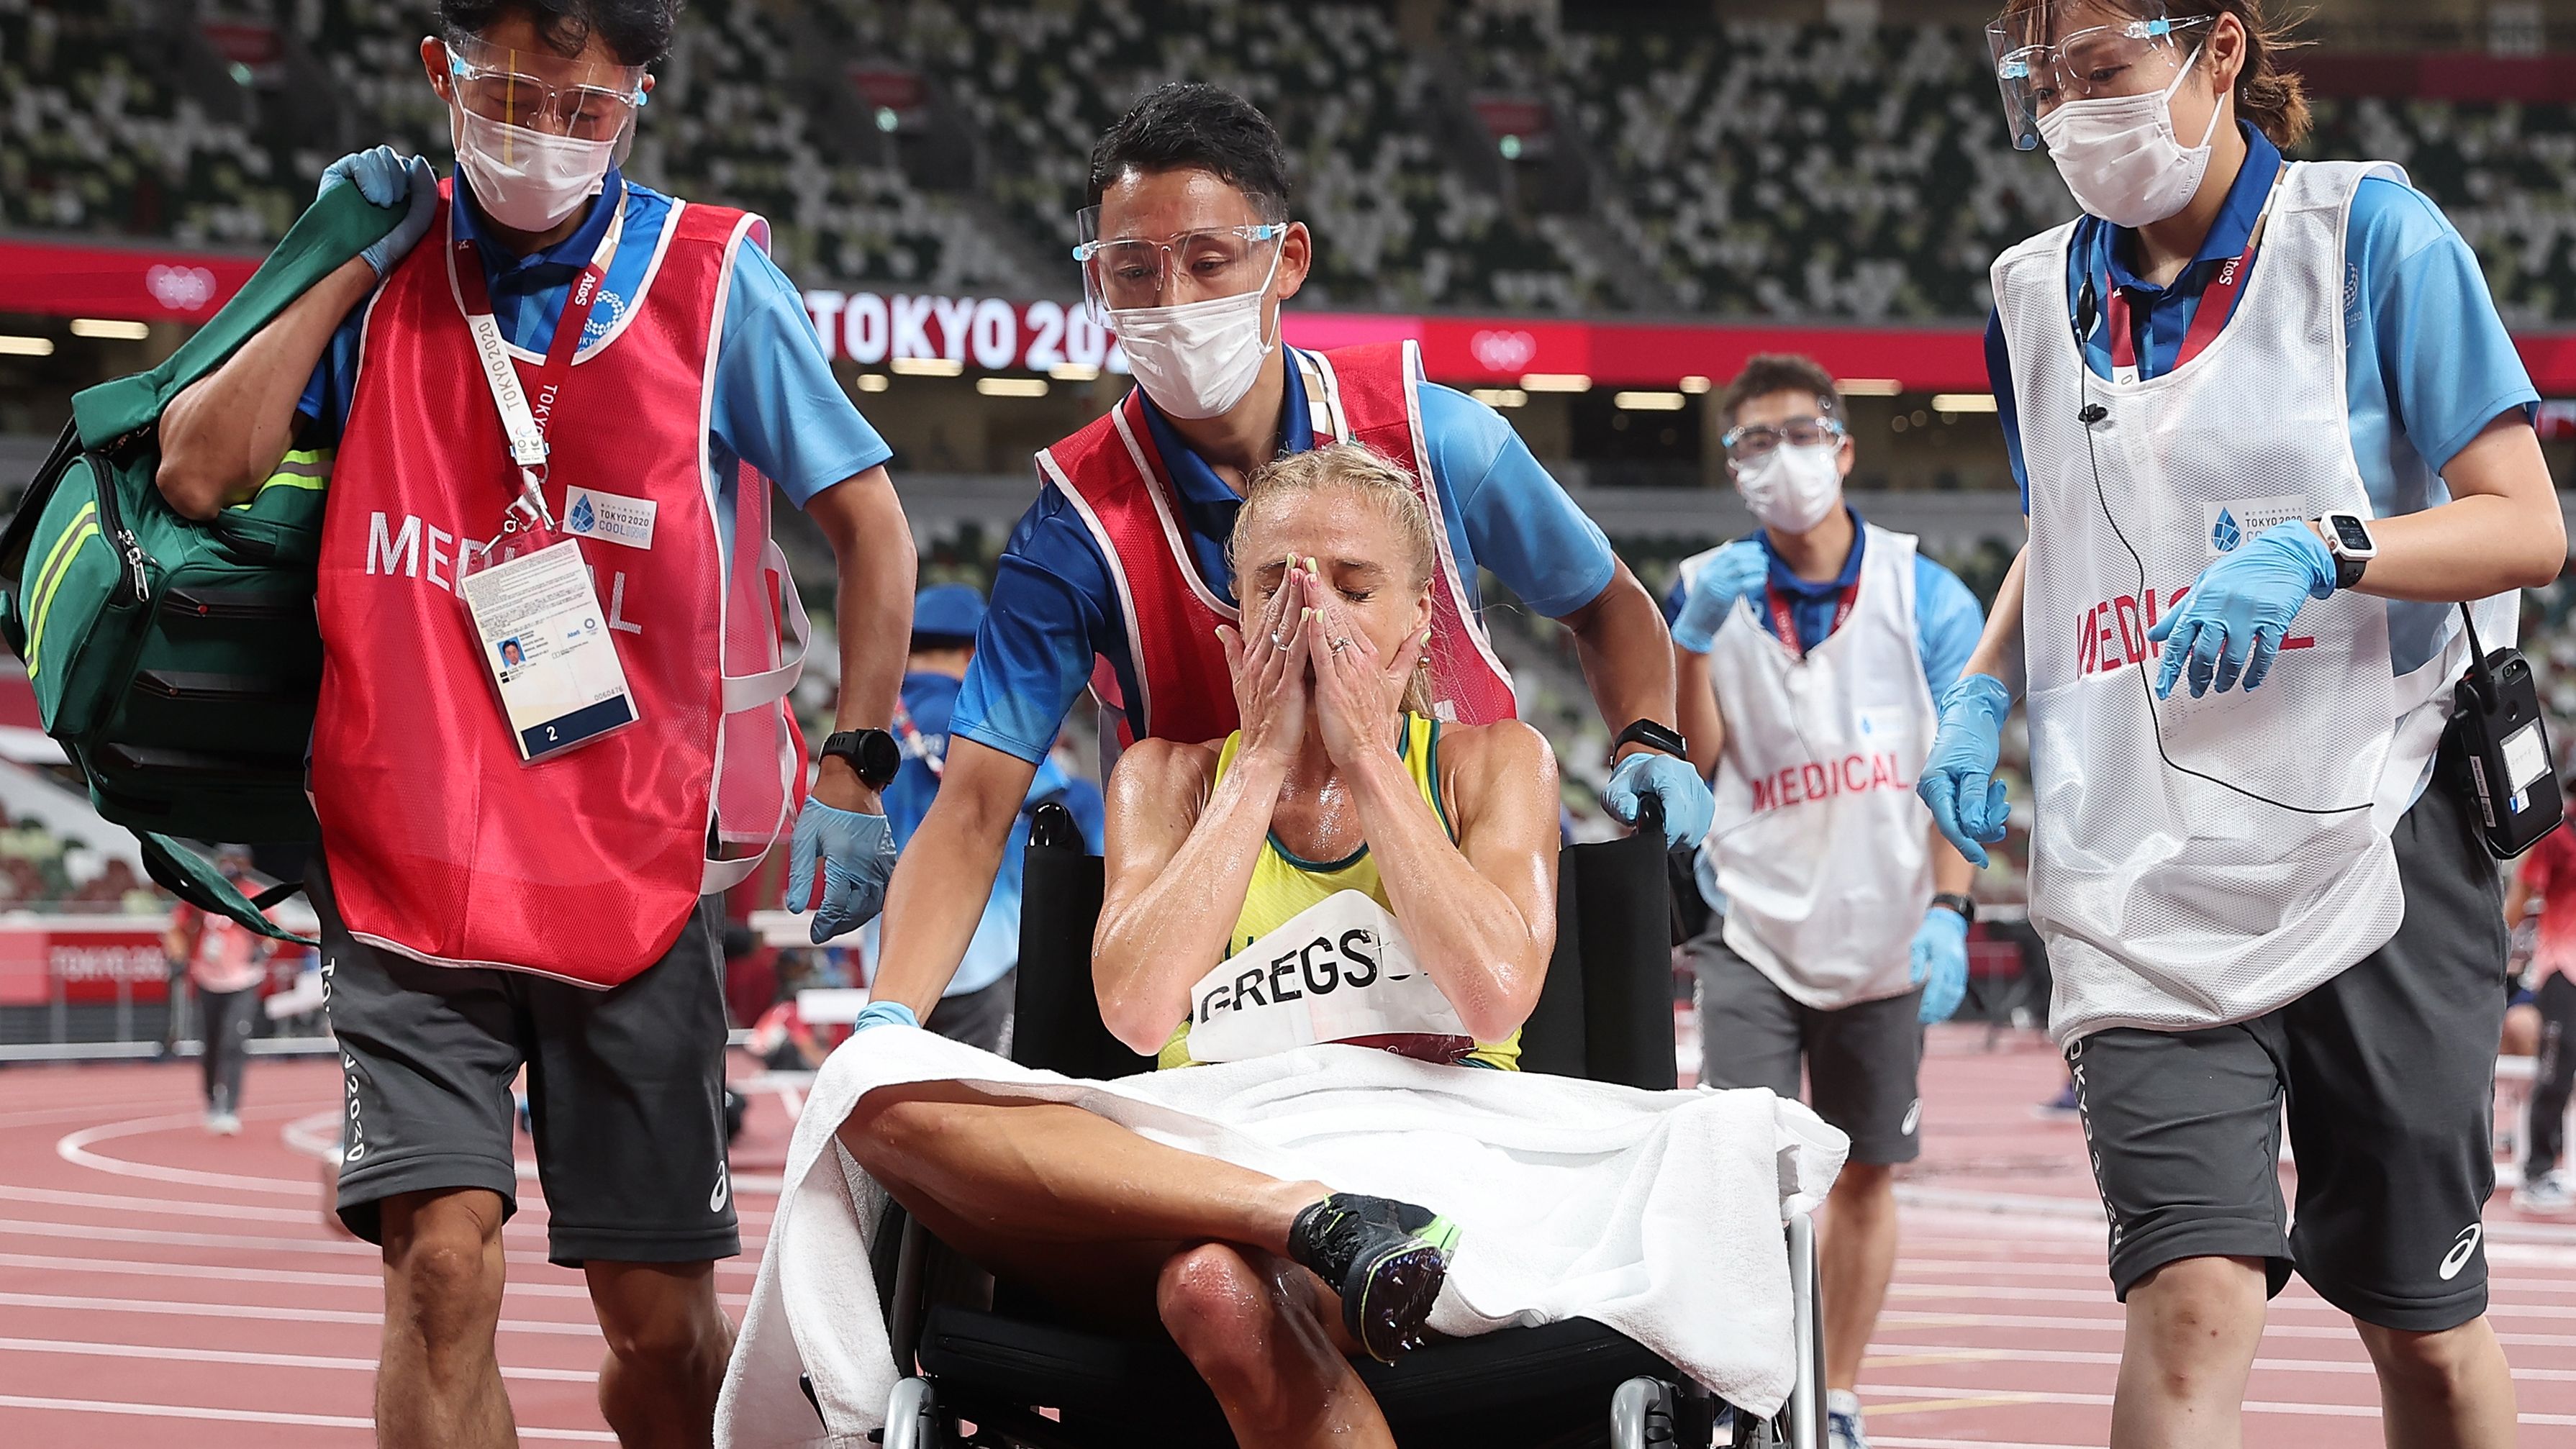 Tokyo 2021: Genevieve Gregson breaks down in emotional interview after Achilles injury